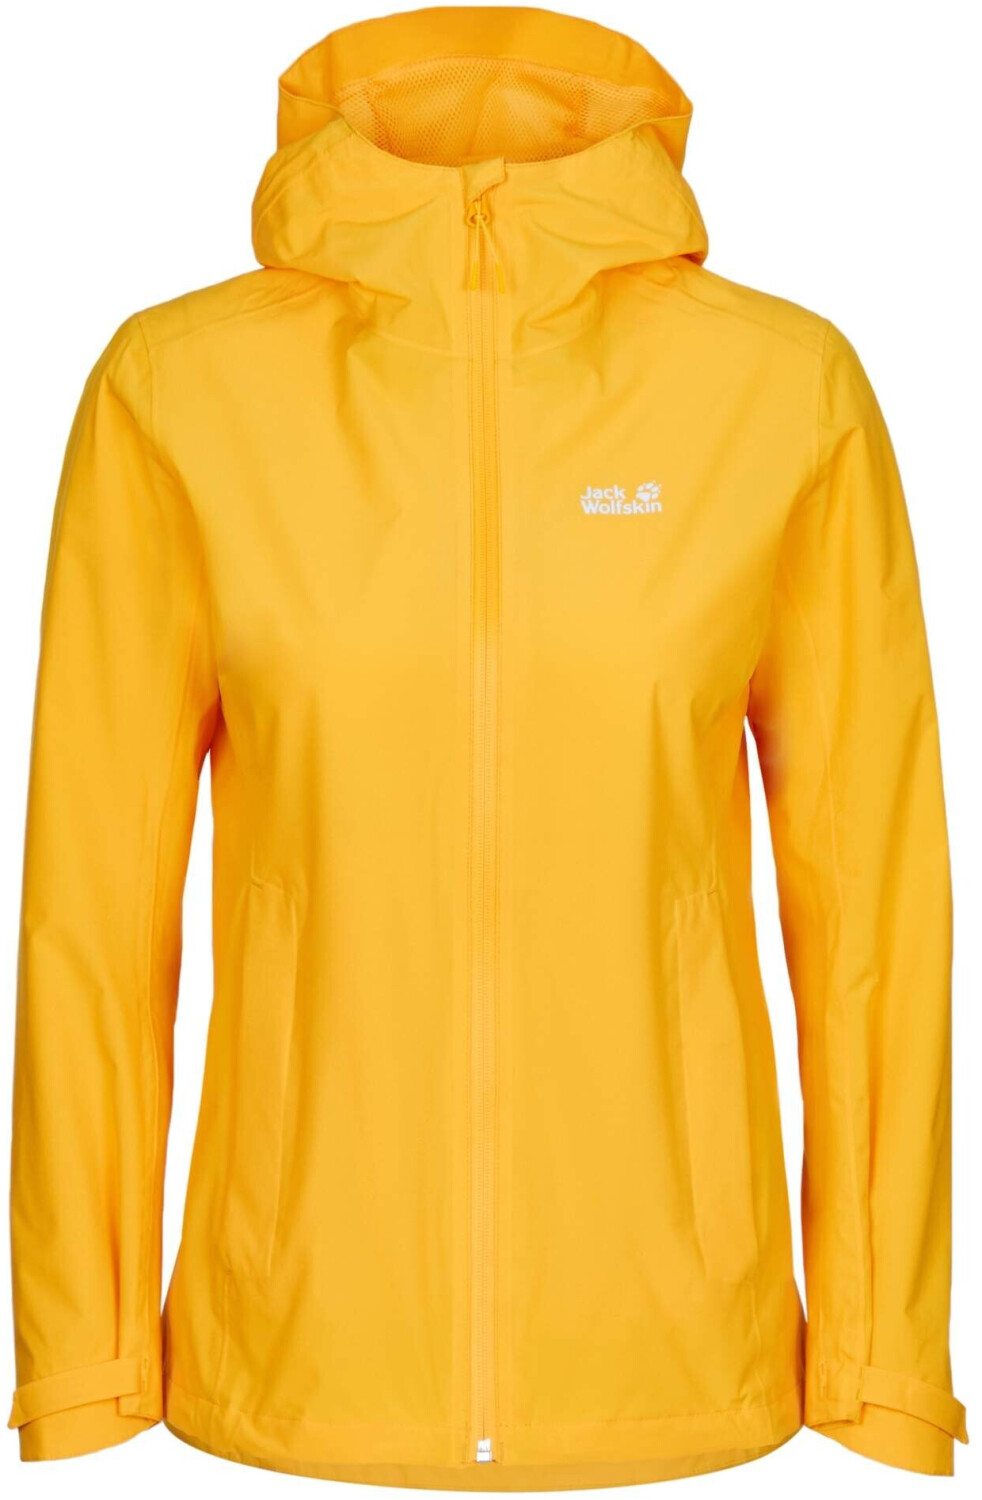 Jack Wolfskin Pack & Go Shell Hardshell-Jacket W burly yellow ab 101,99 € |  Preisvergleich bei